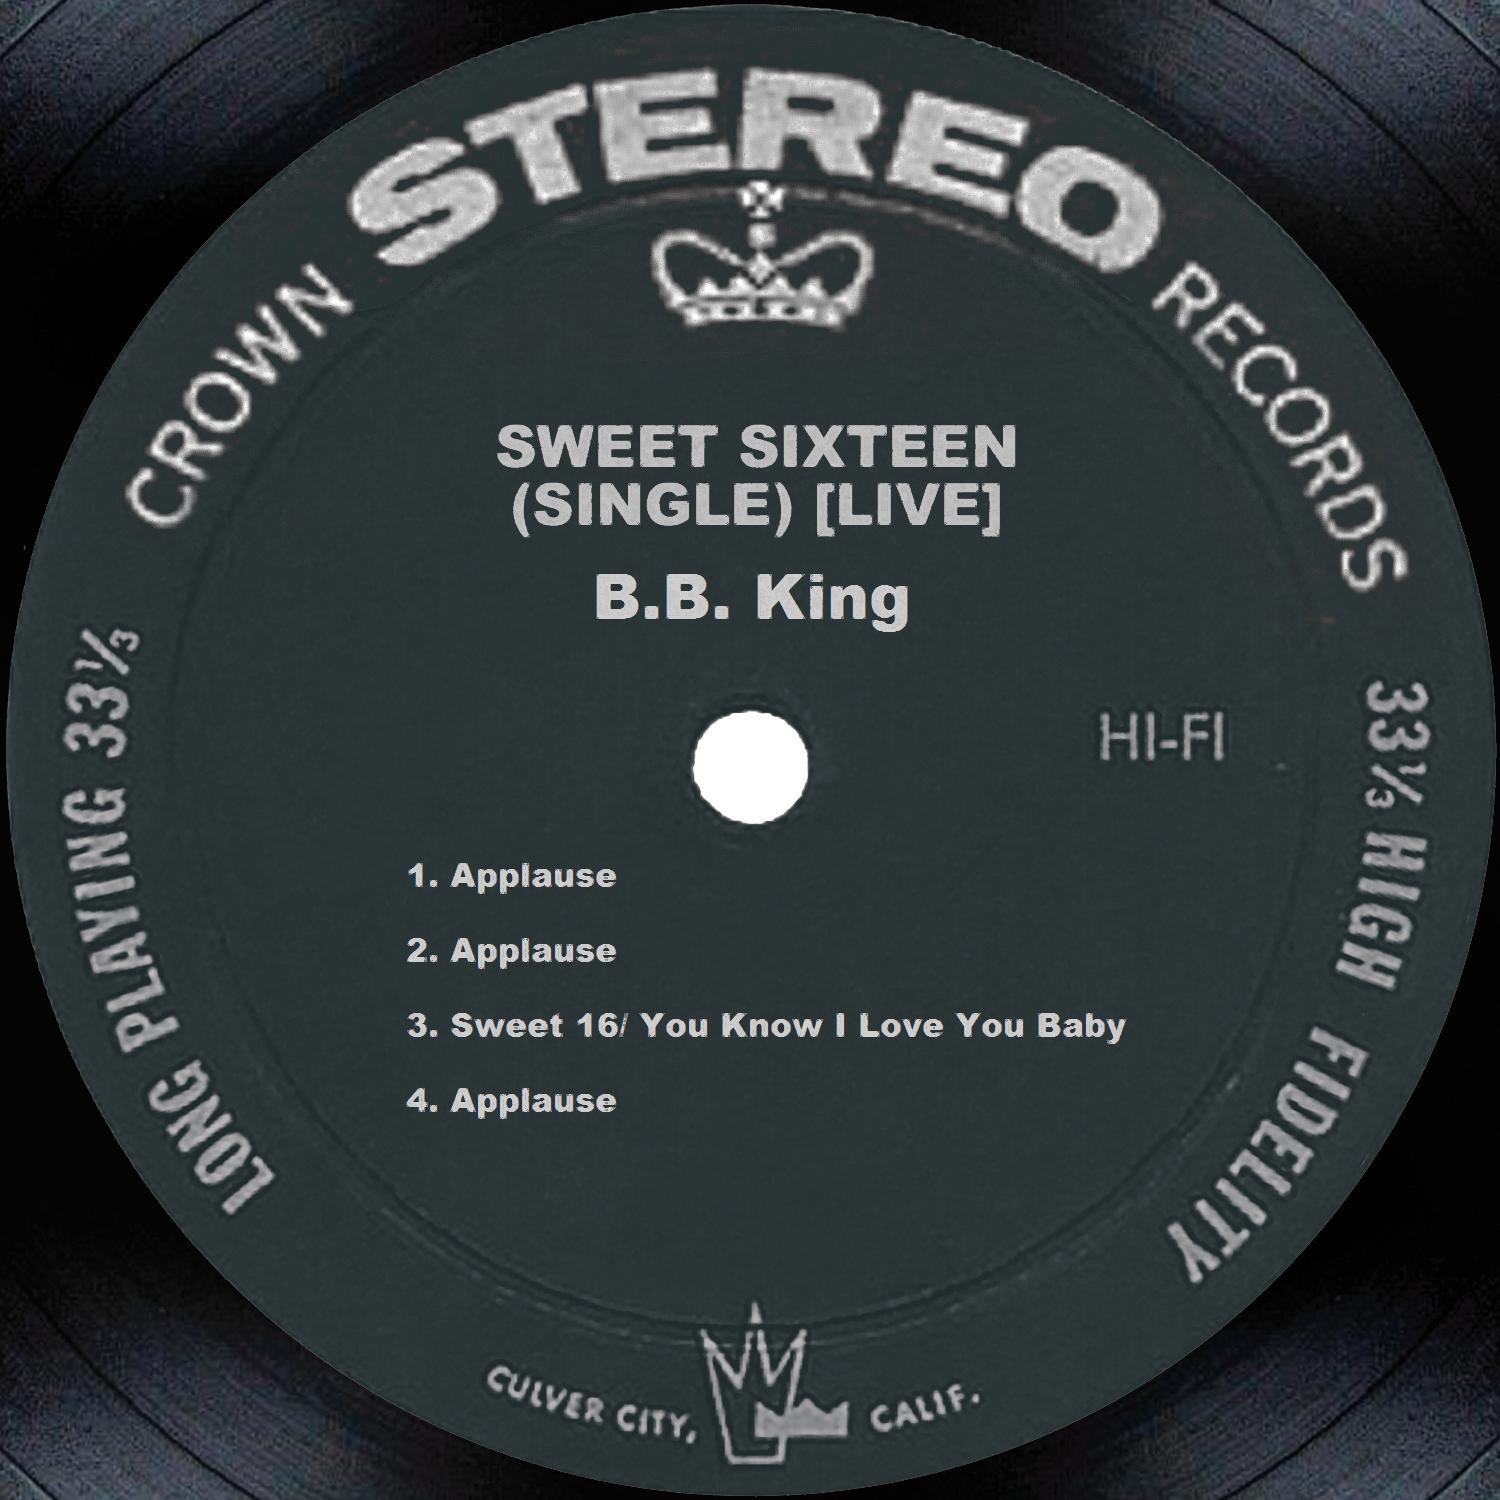 B.B. King - Sweet Sixteen (Single) [Live]专辑